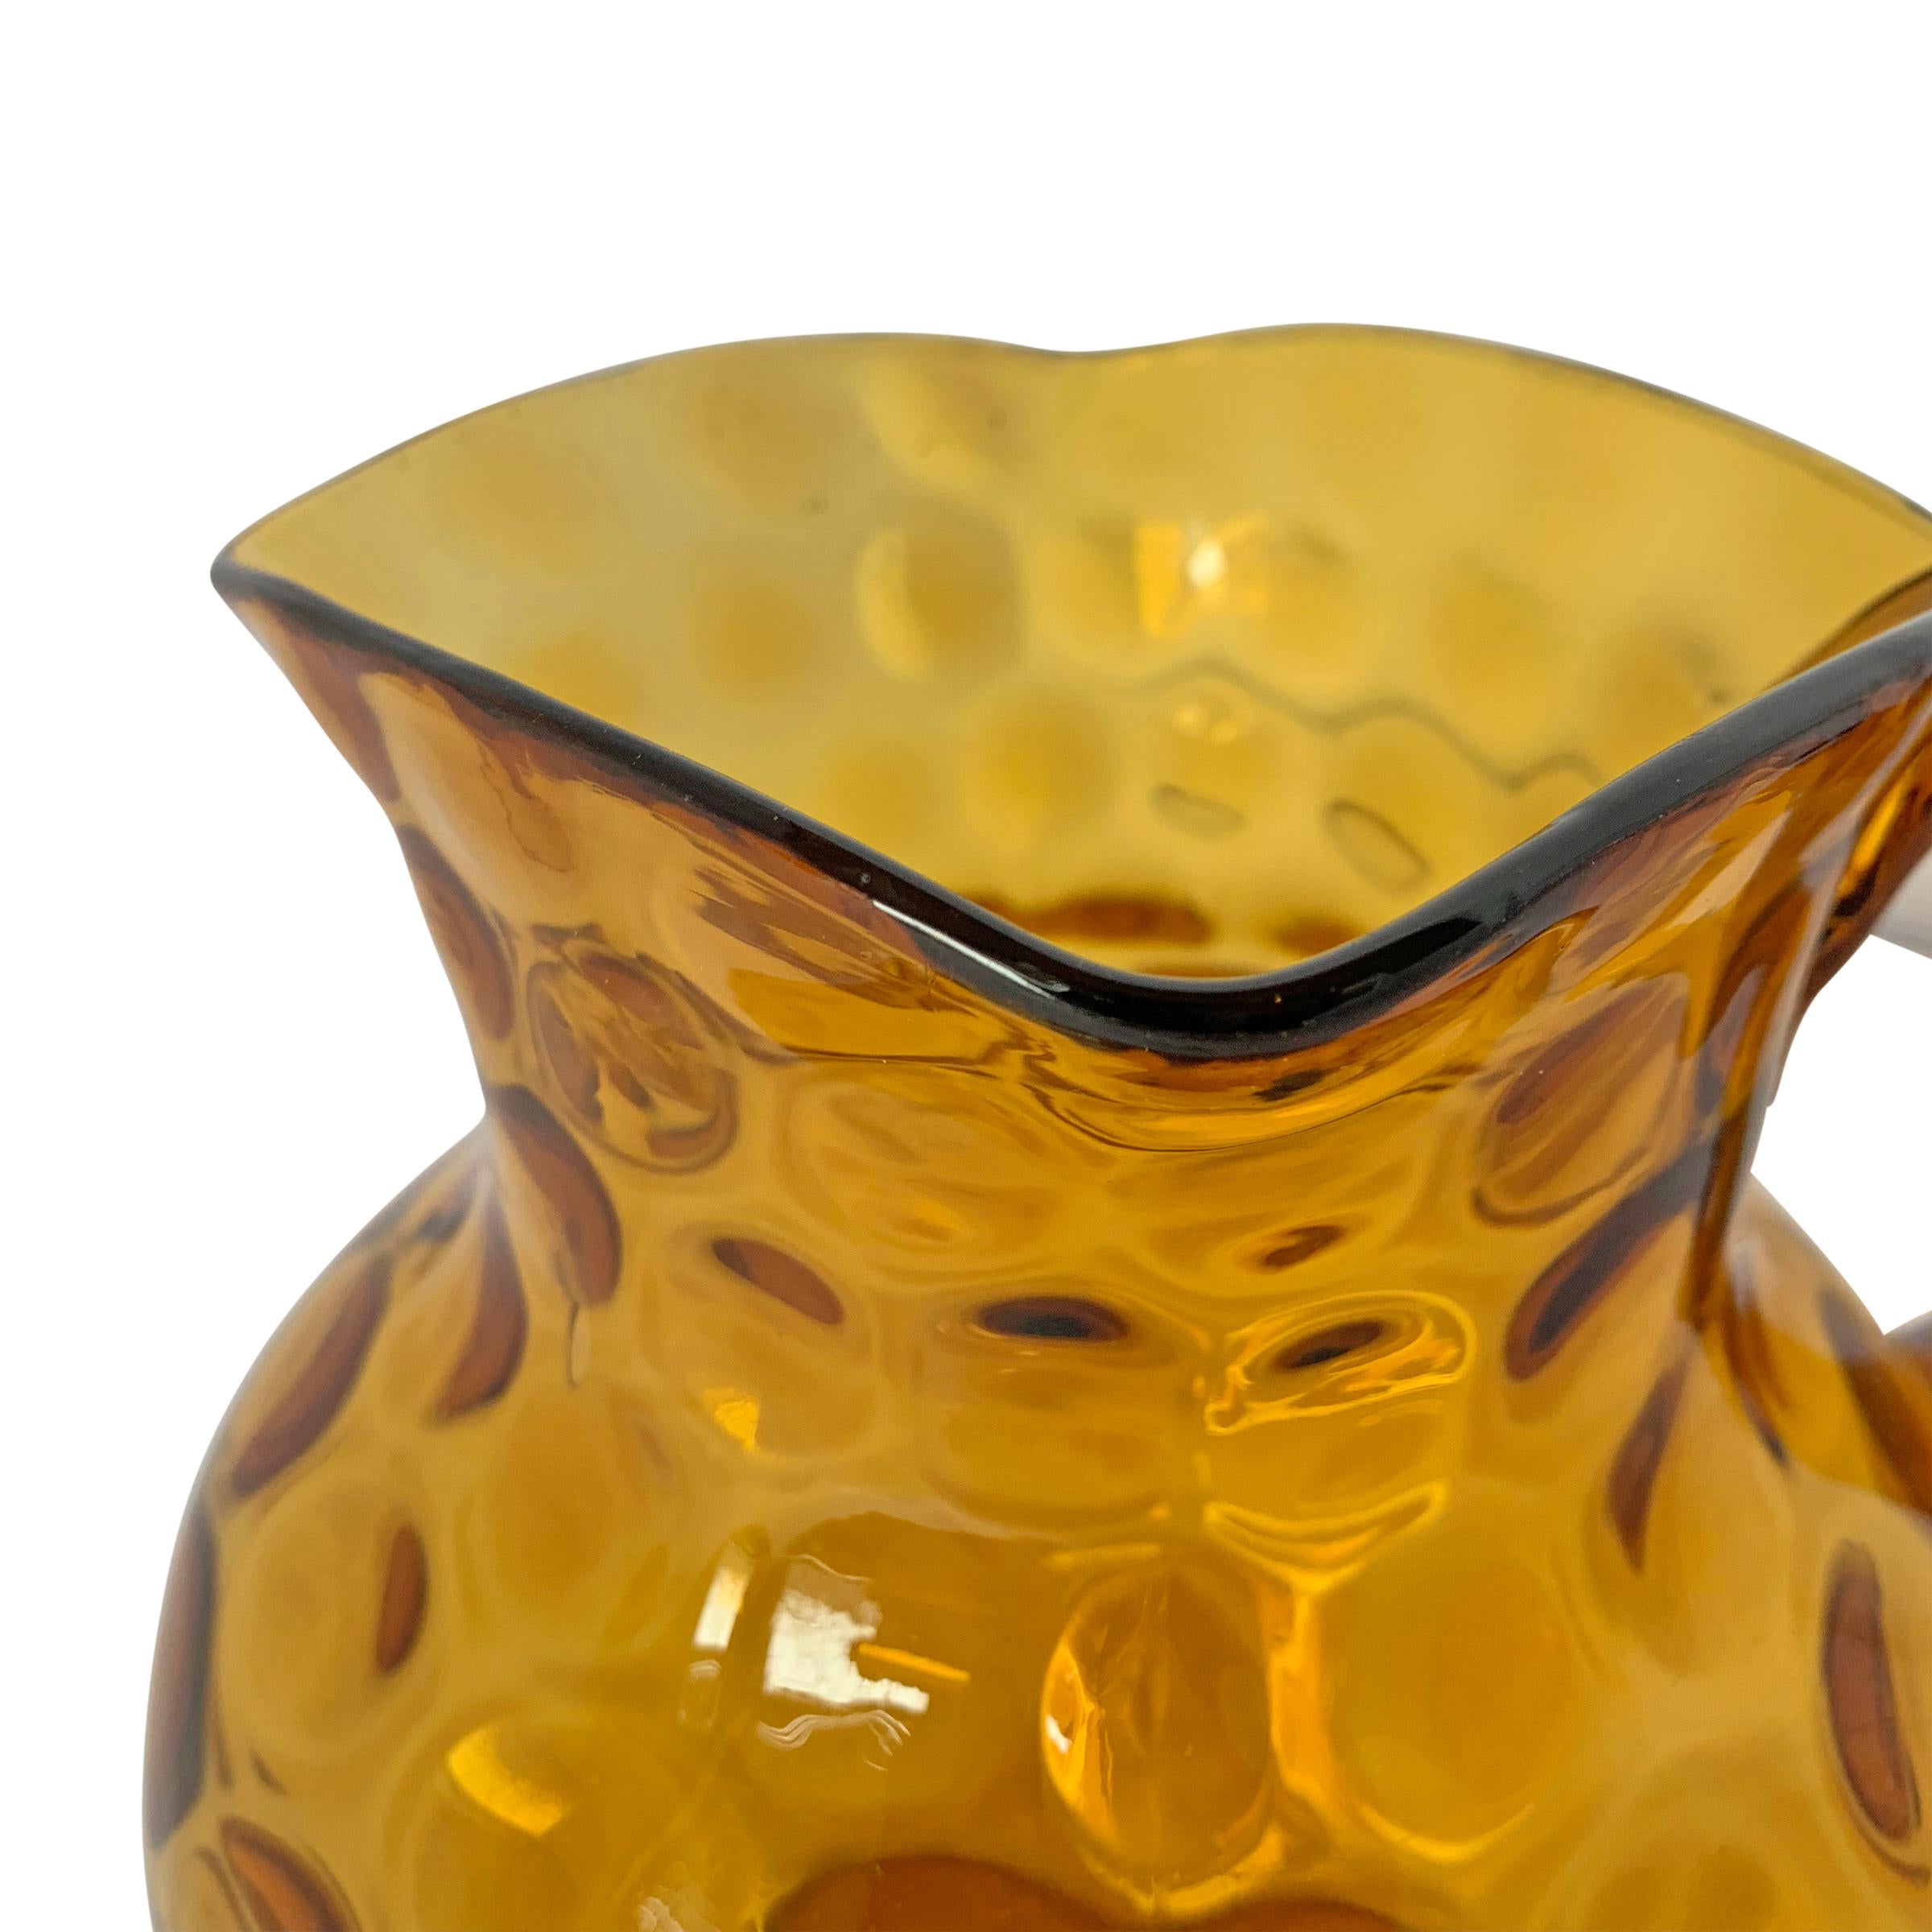 brown glass pitcher